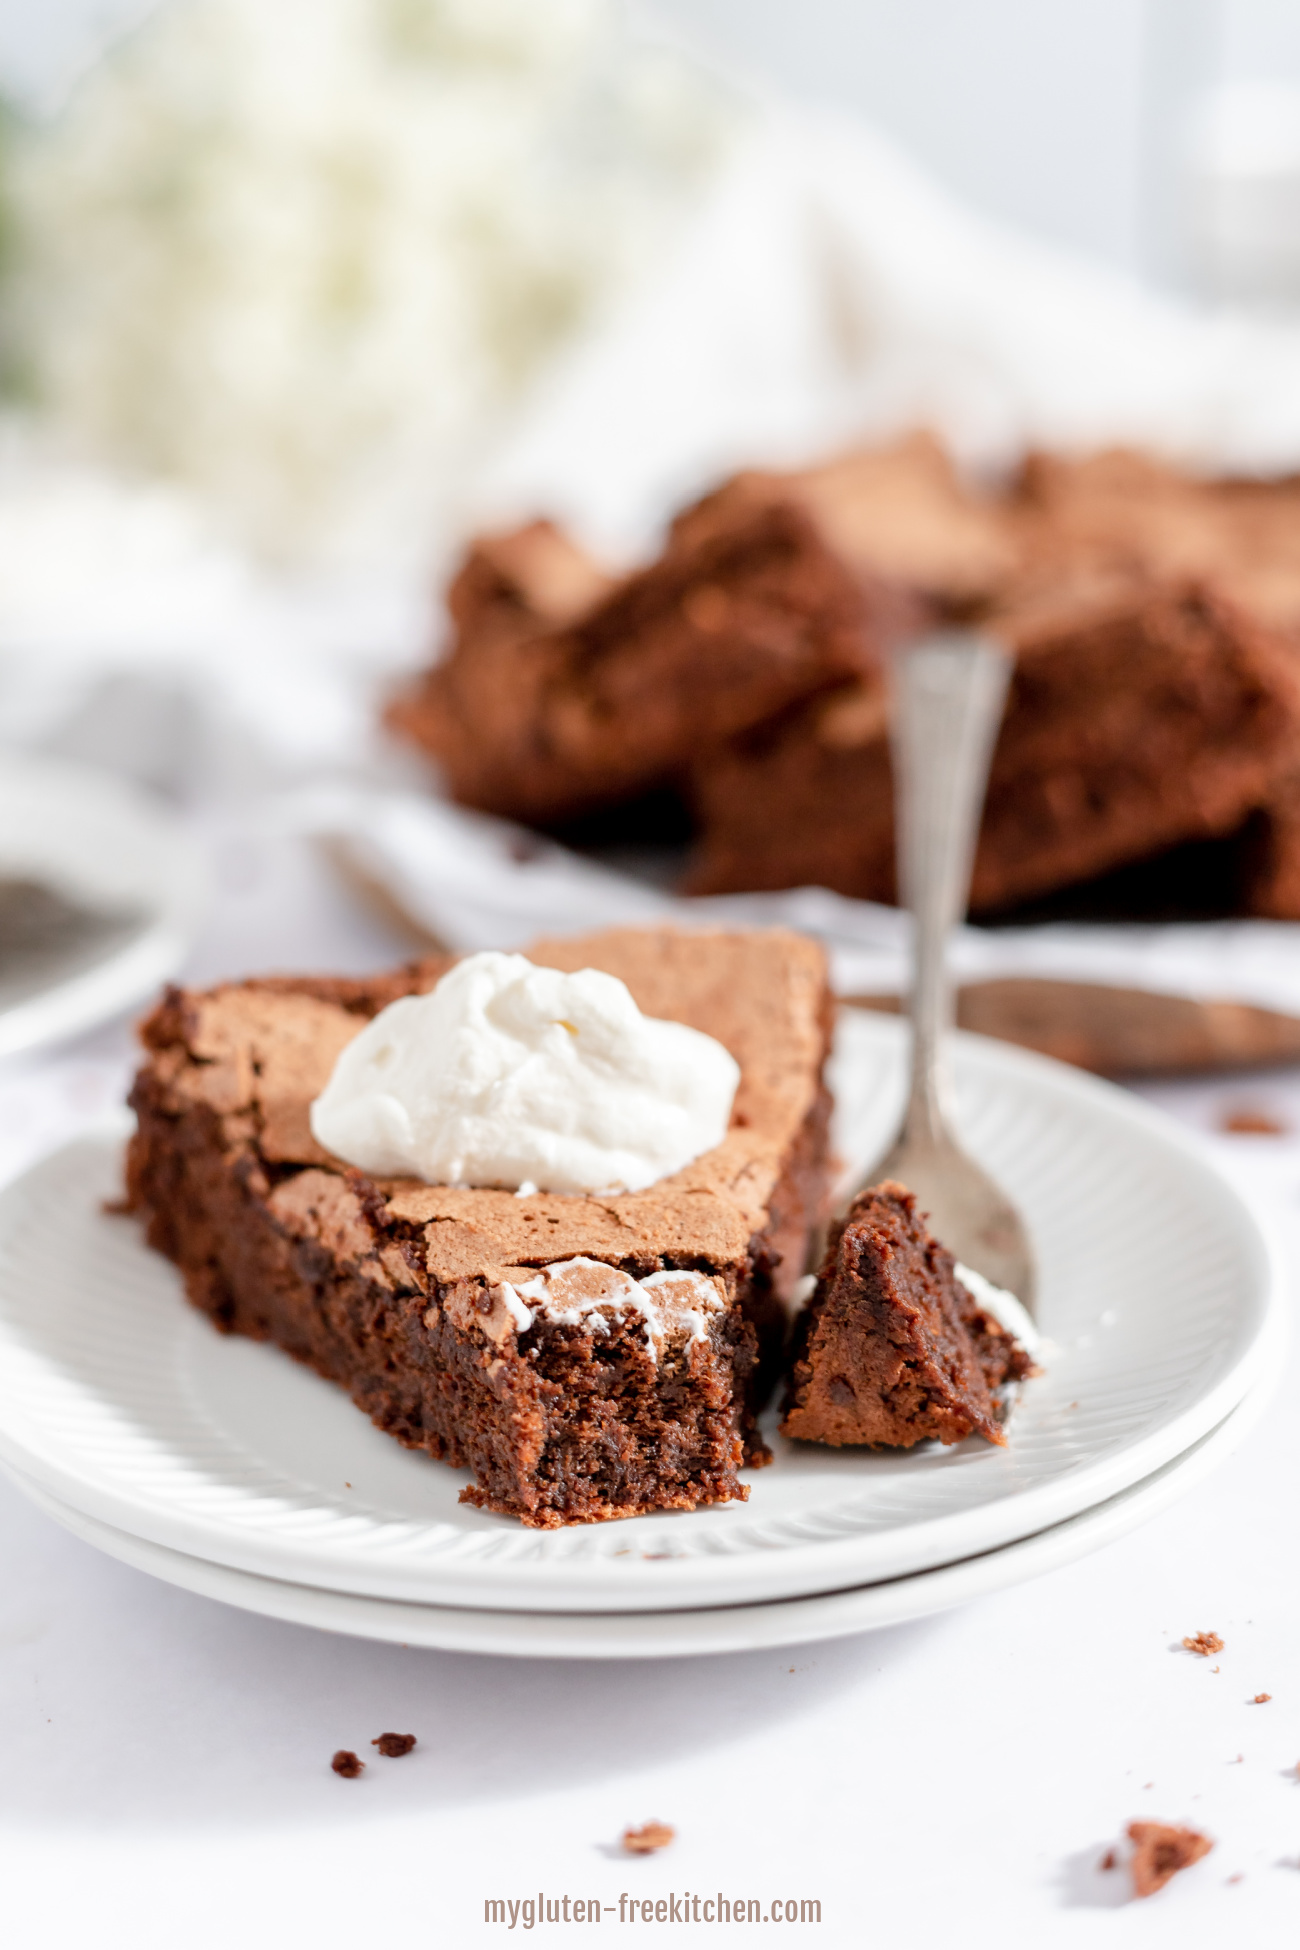 https://mygluten-freekitchen.com/wp-content/uploads/2013/02/Best-Flourless-Chocolate-Cake-Recipe.jpeg